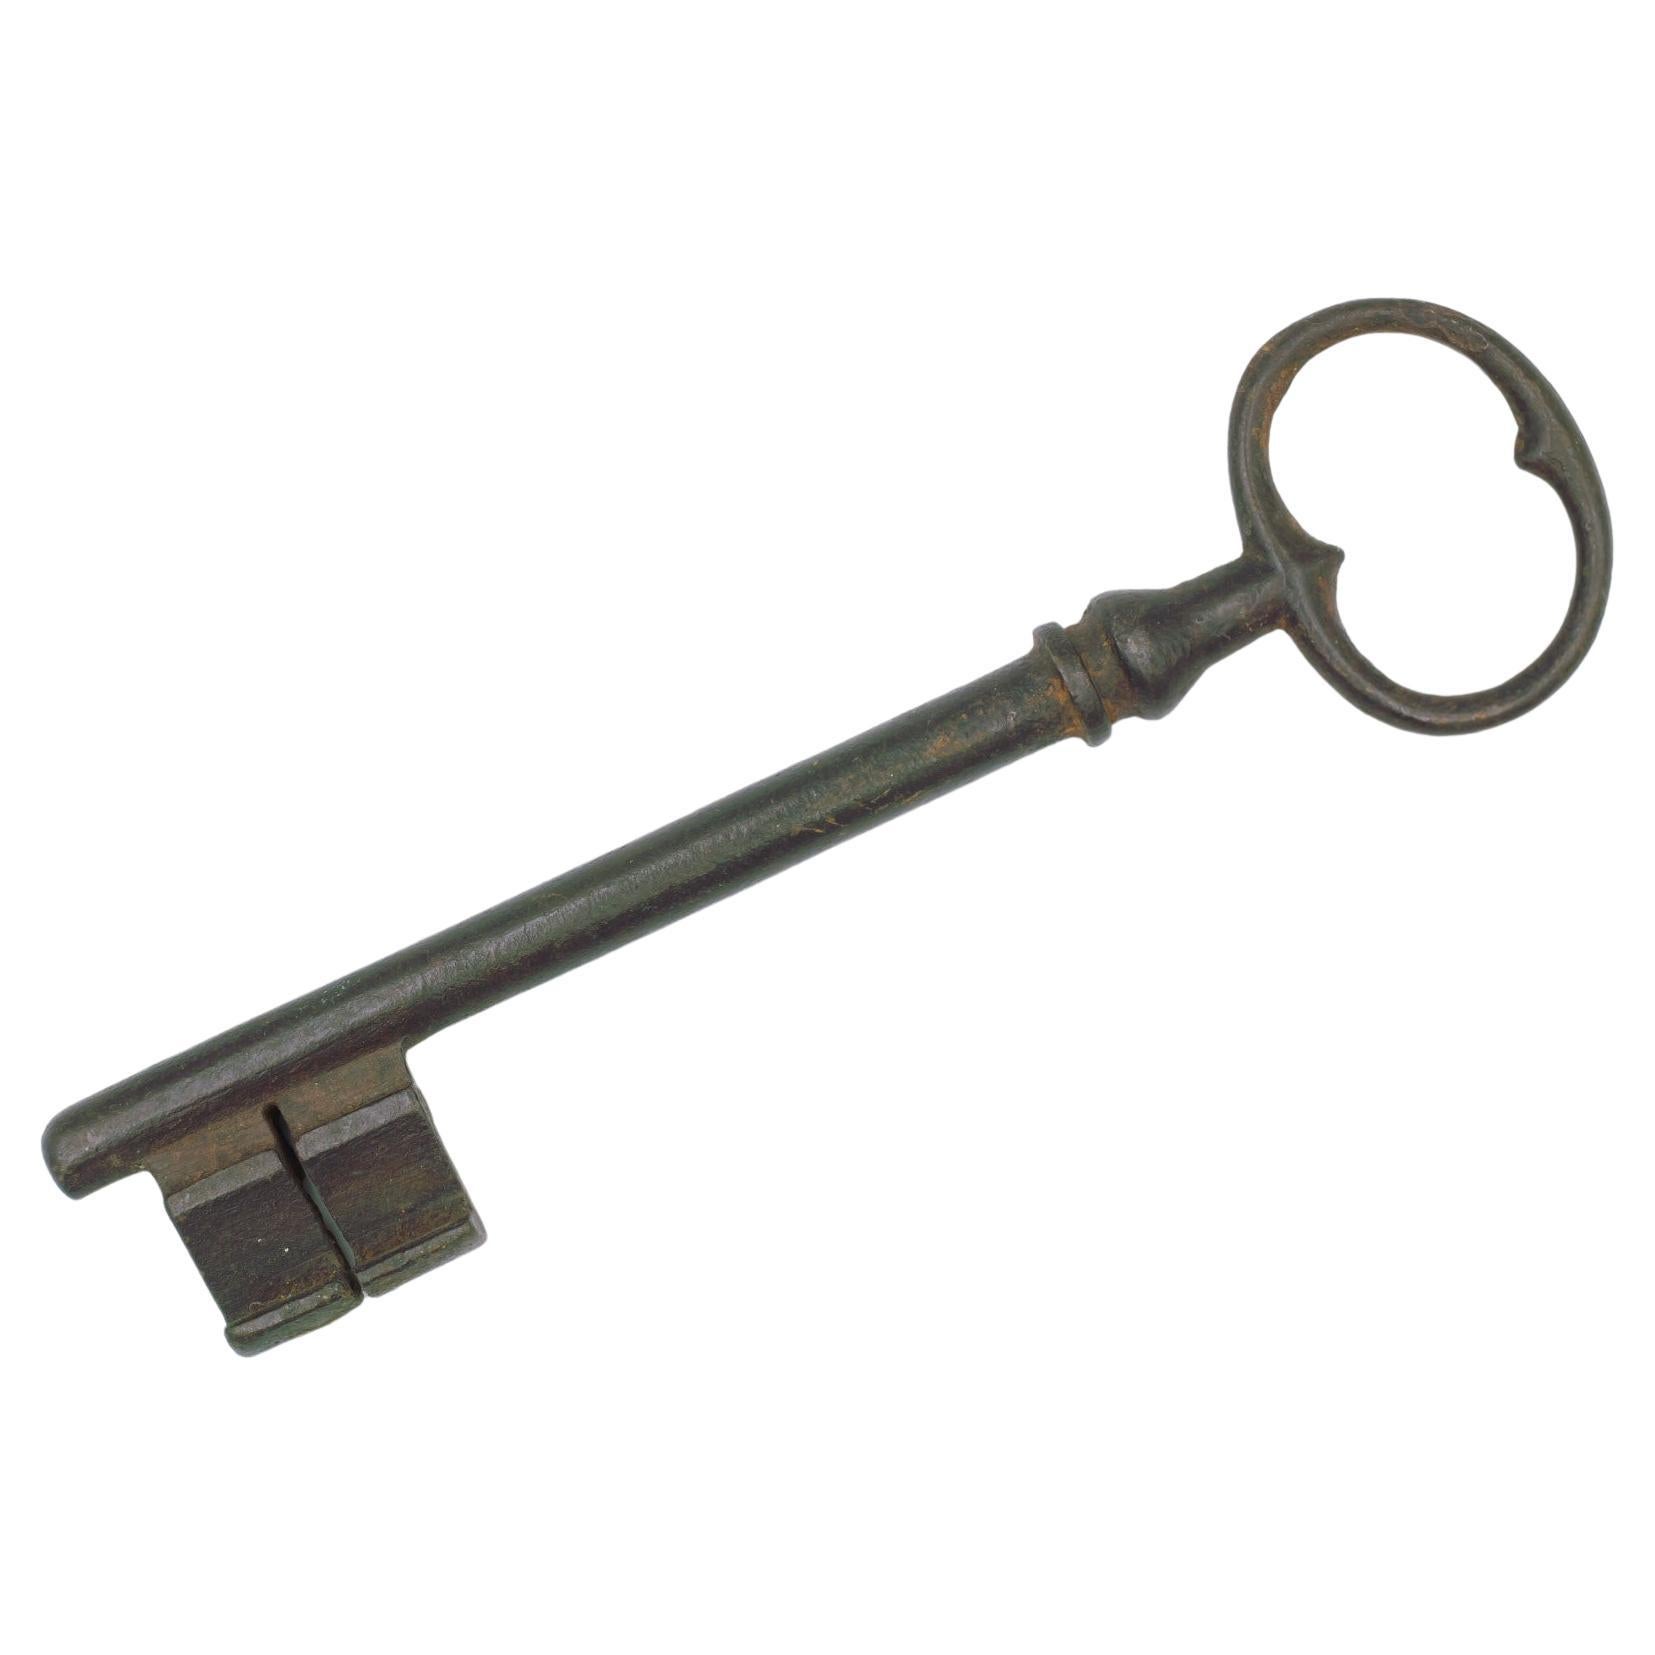 Big Antique 17th century key 